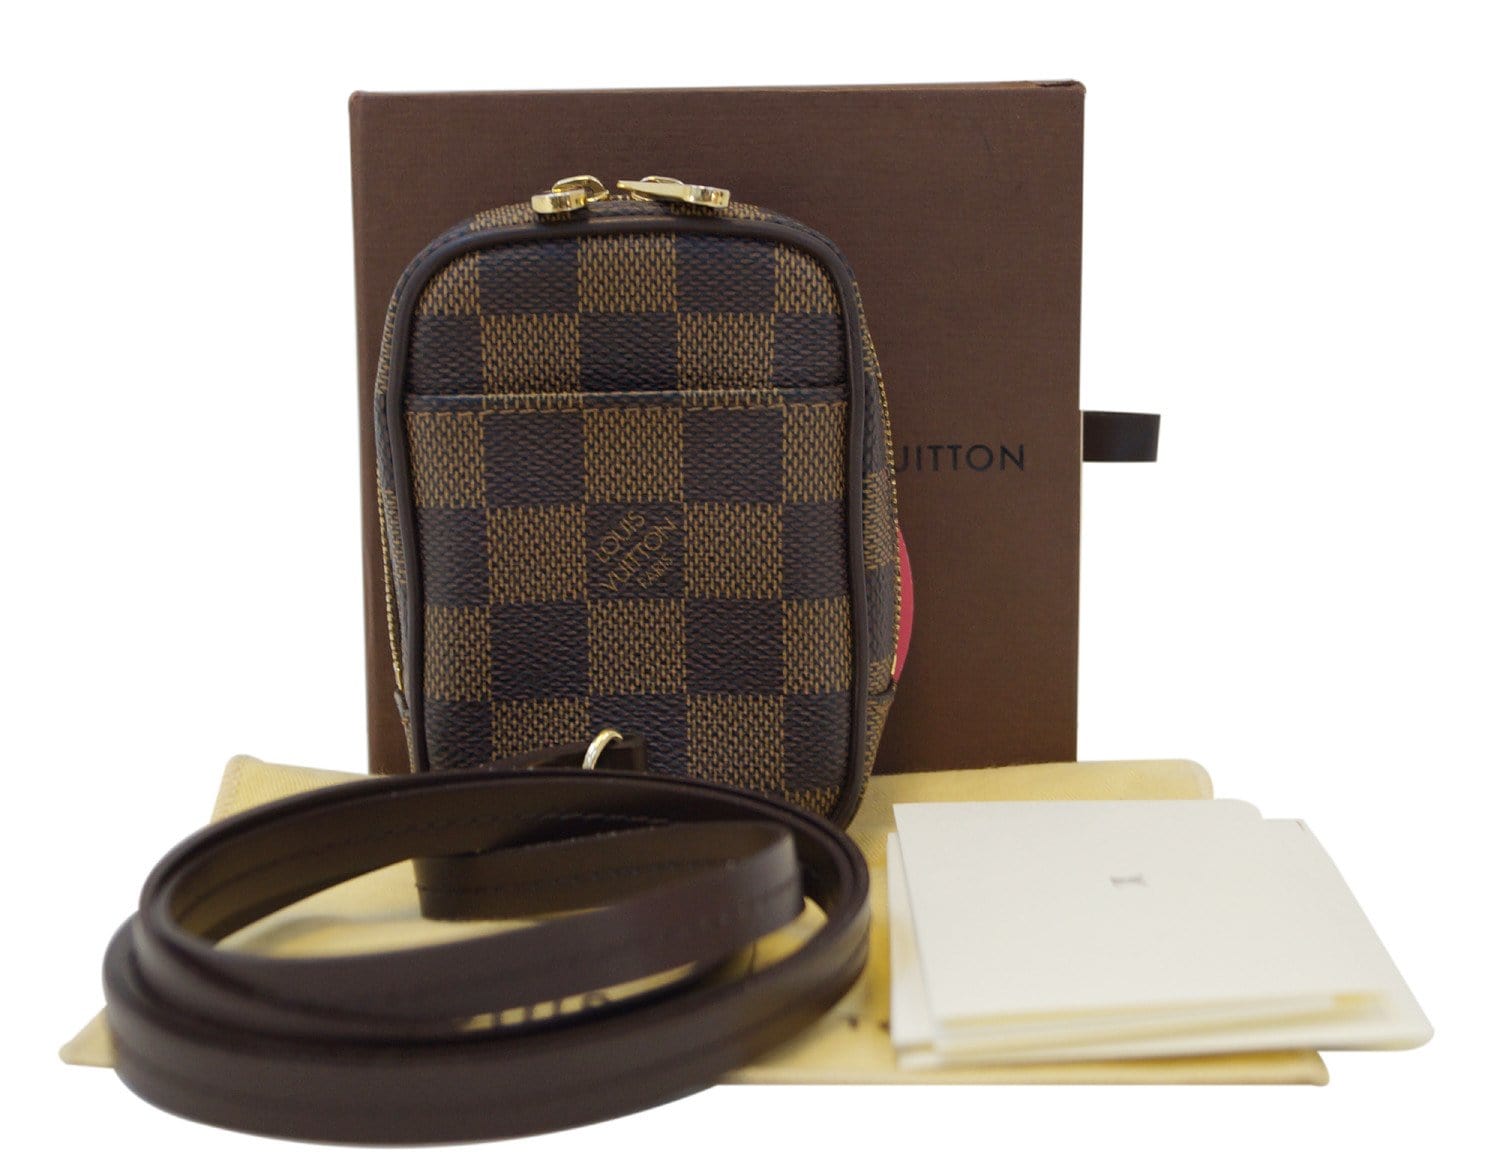 SOLD) Louis Vuitton Limited Edition Monogram Camera Box Bag Louis